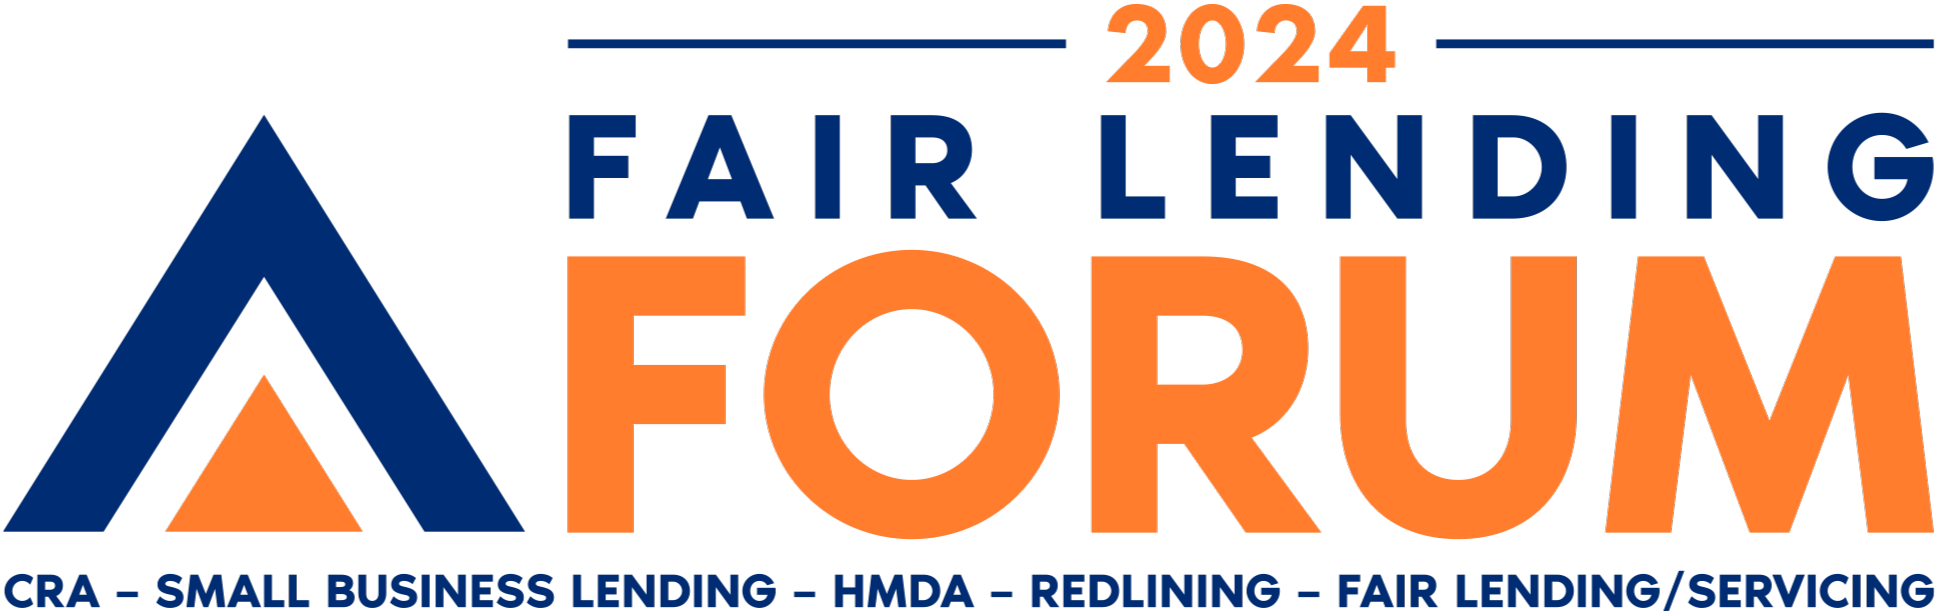 2024 Fair Lending Forum Logo